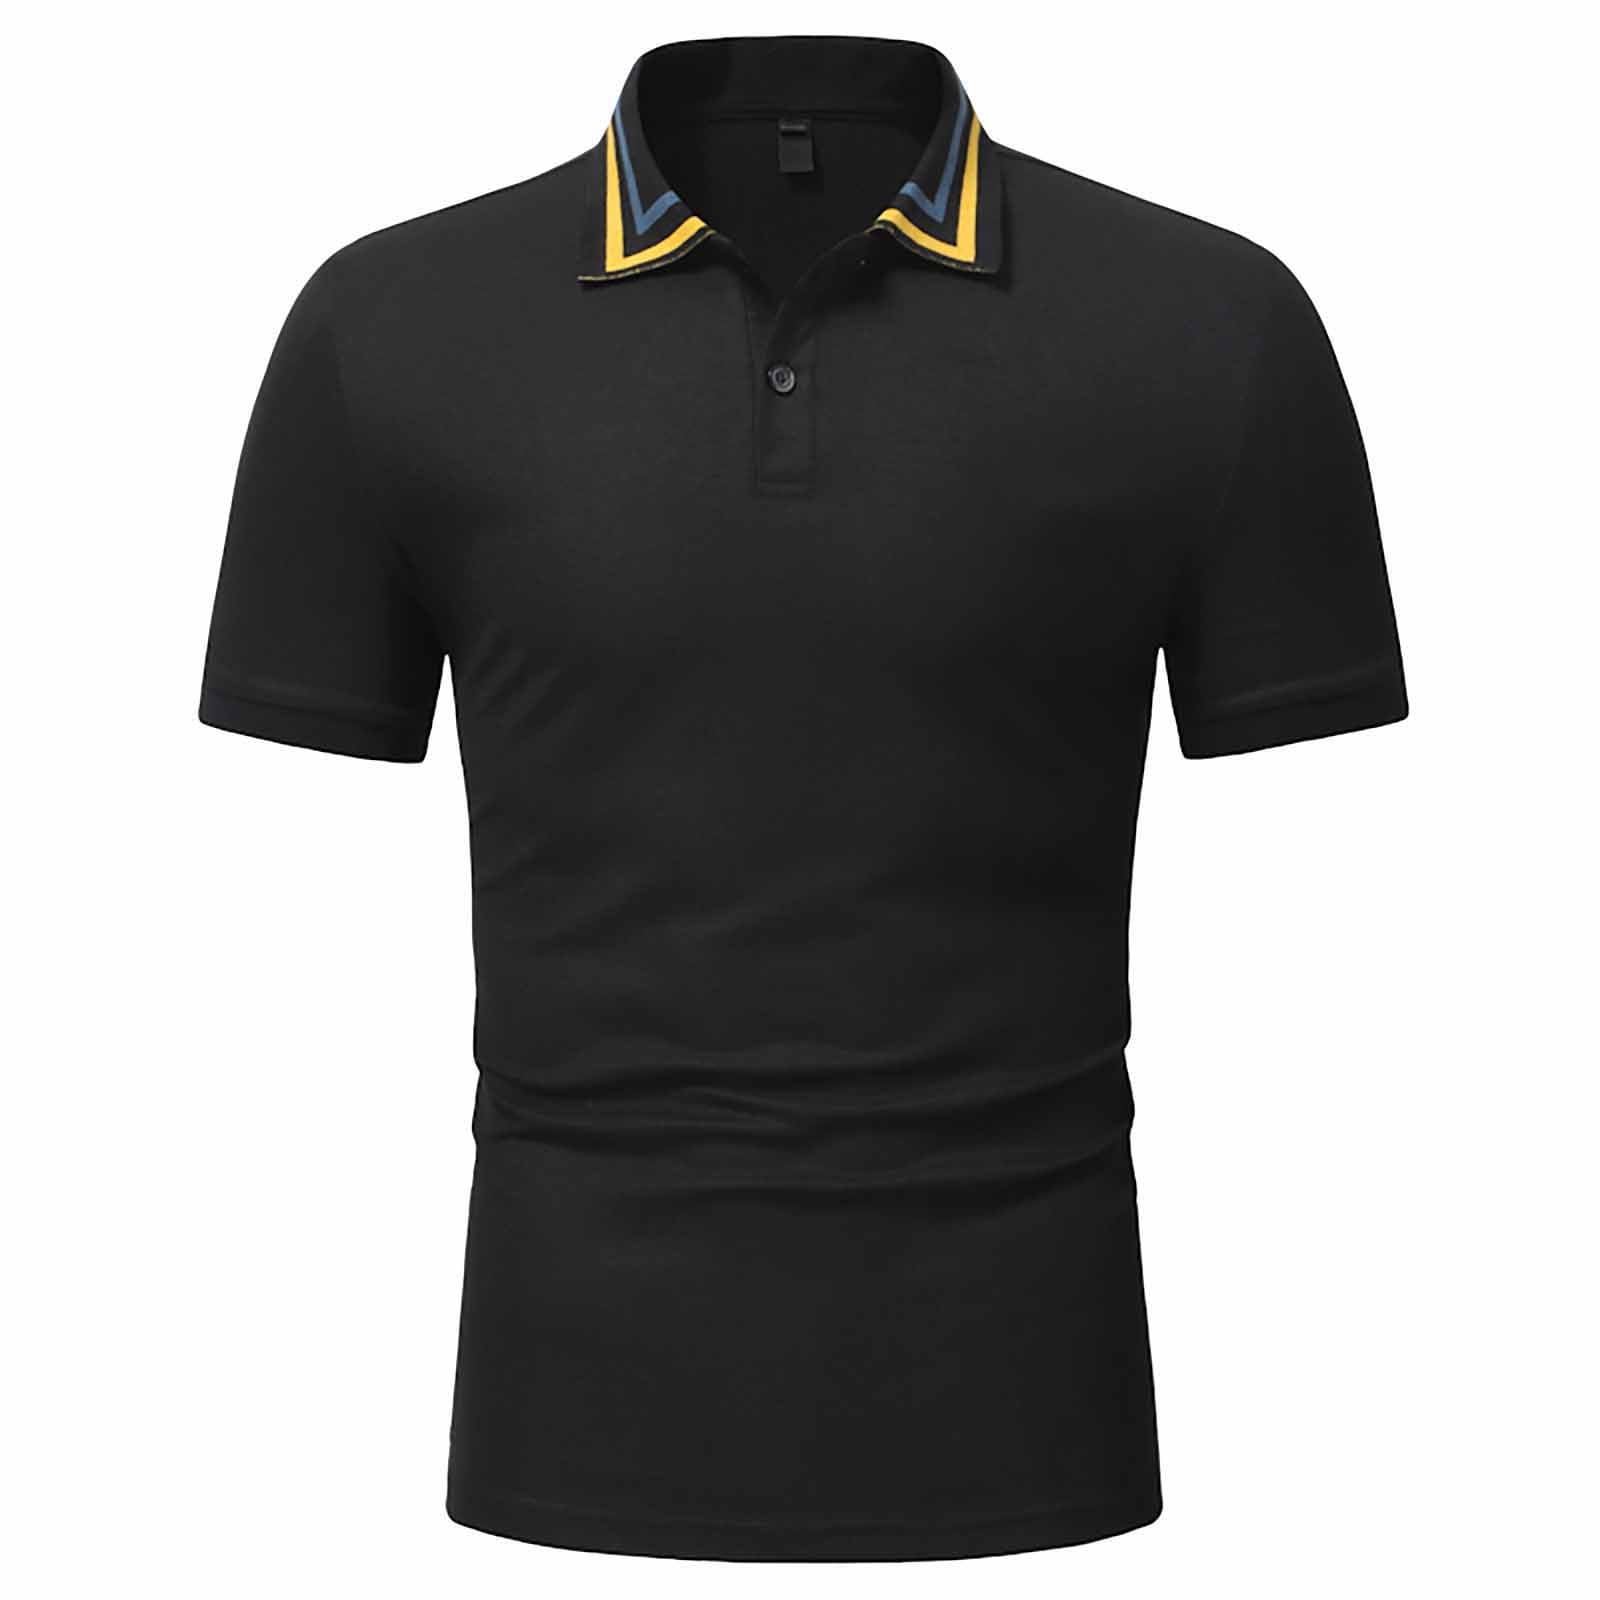 tklpehg Polo Shirts for Men Lapel Button T Shirts Polo Shirts Short ...